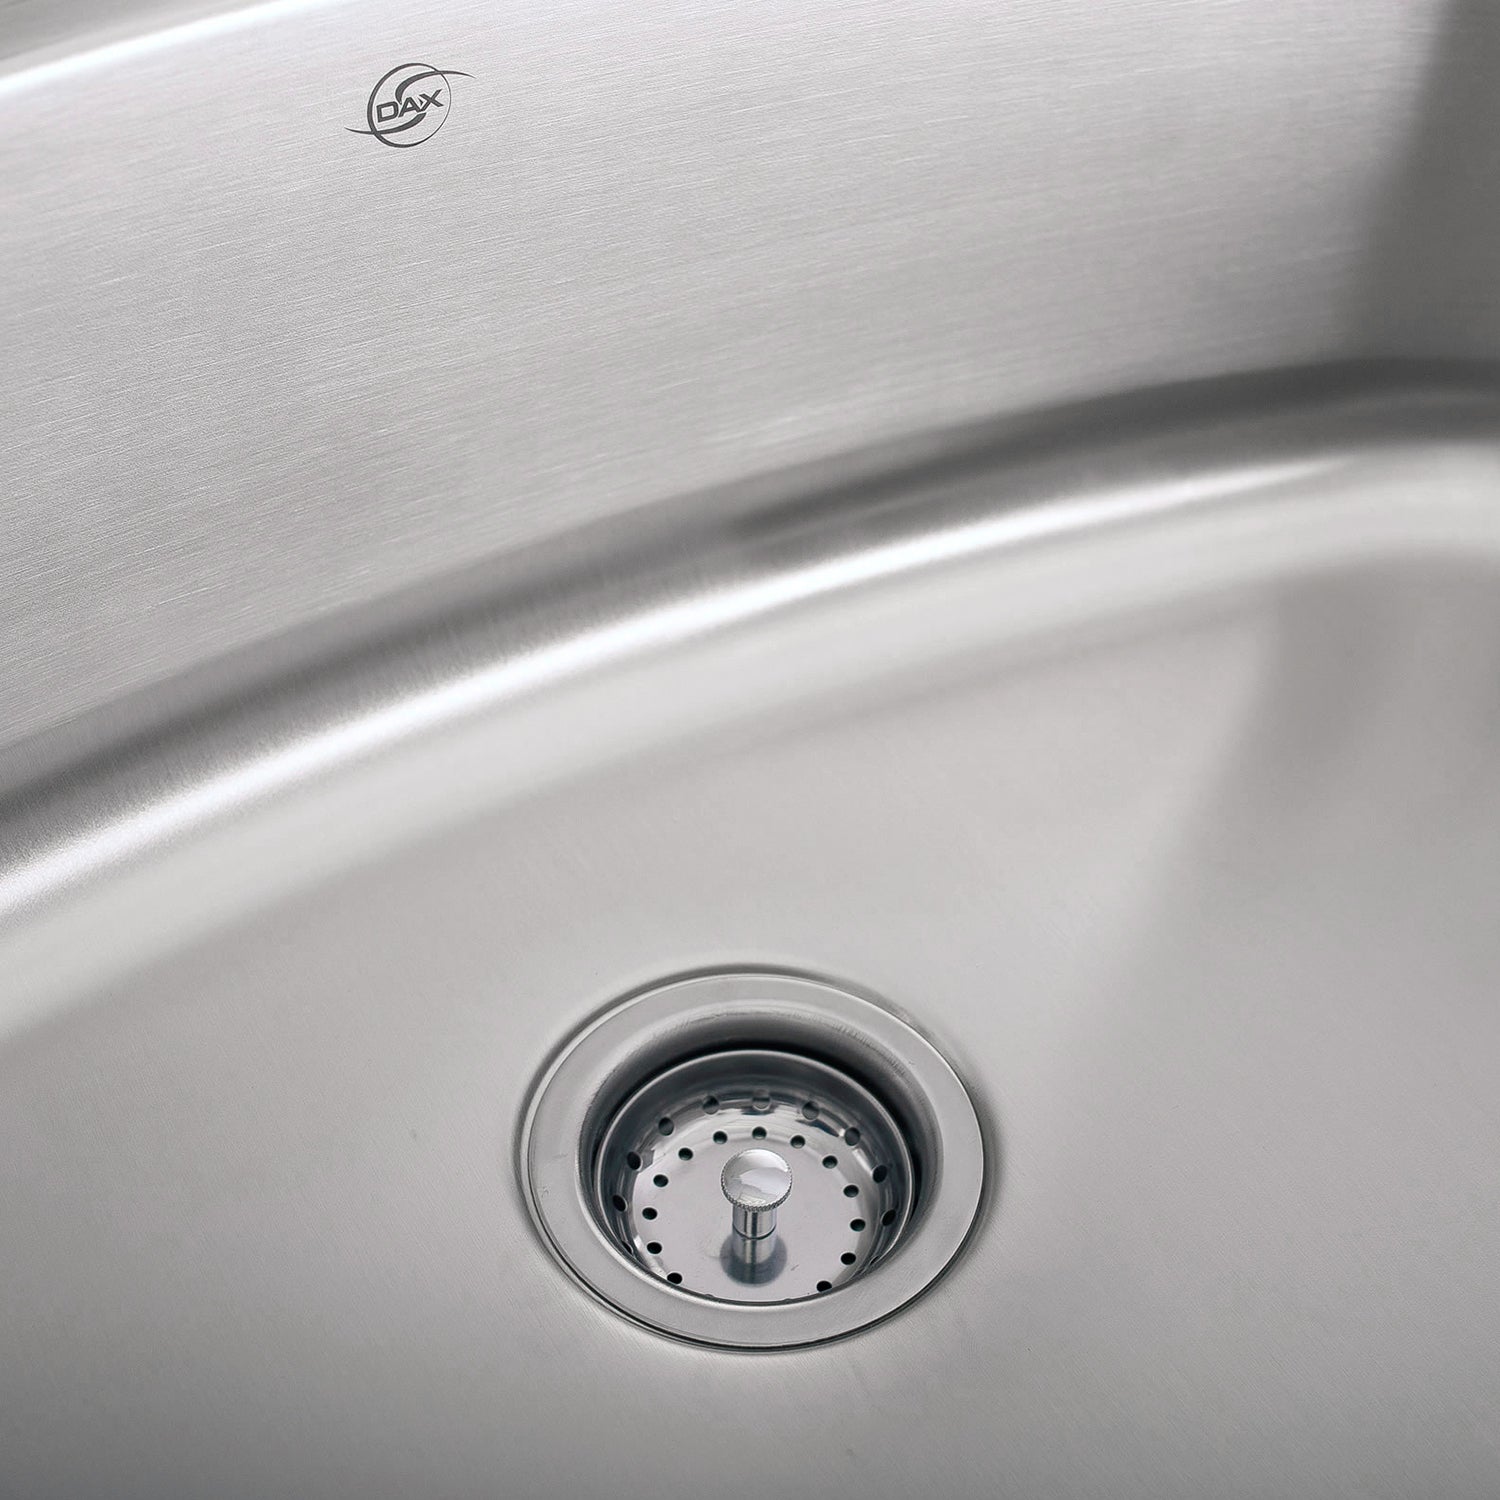 DAX Single Bowl Undermount Kitchen Sink, 18 Gauge Stainless Steel, Brushed Finish , 32-1/2 x 18-9/16 x 9 Inches (DAX-3319)